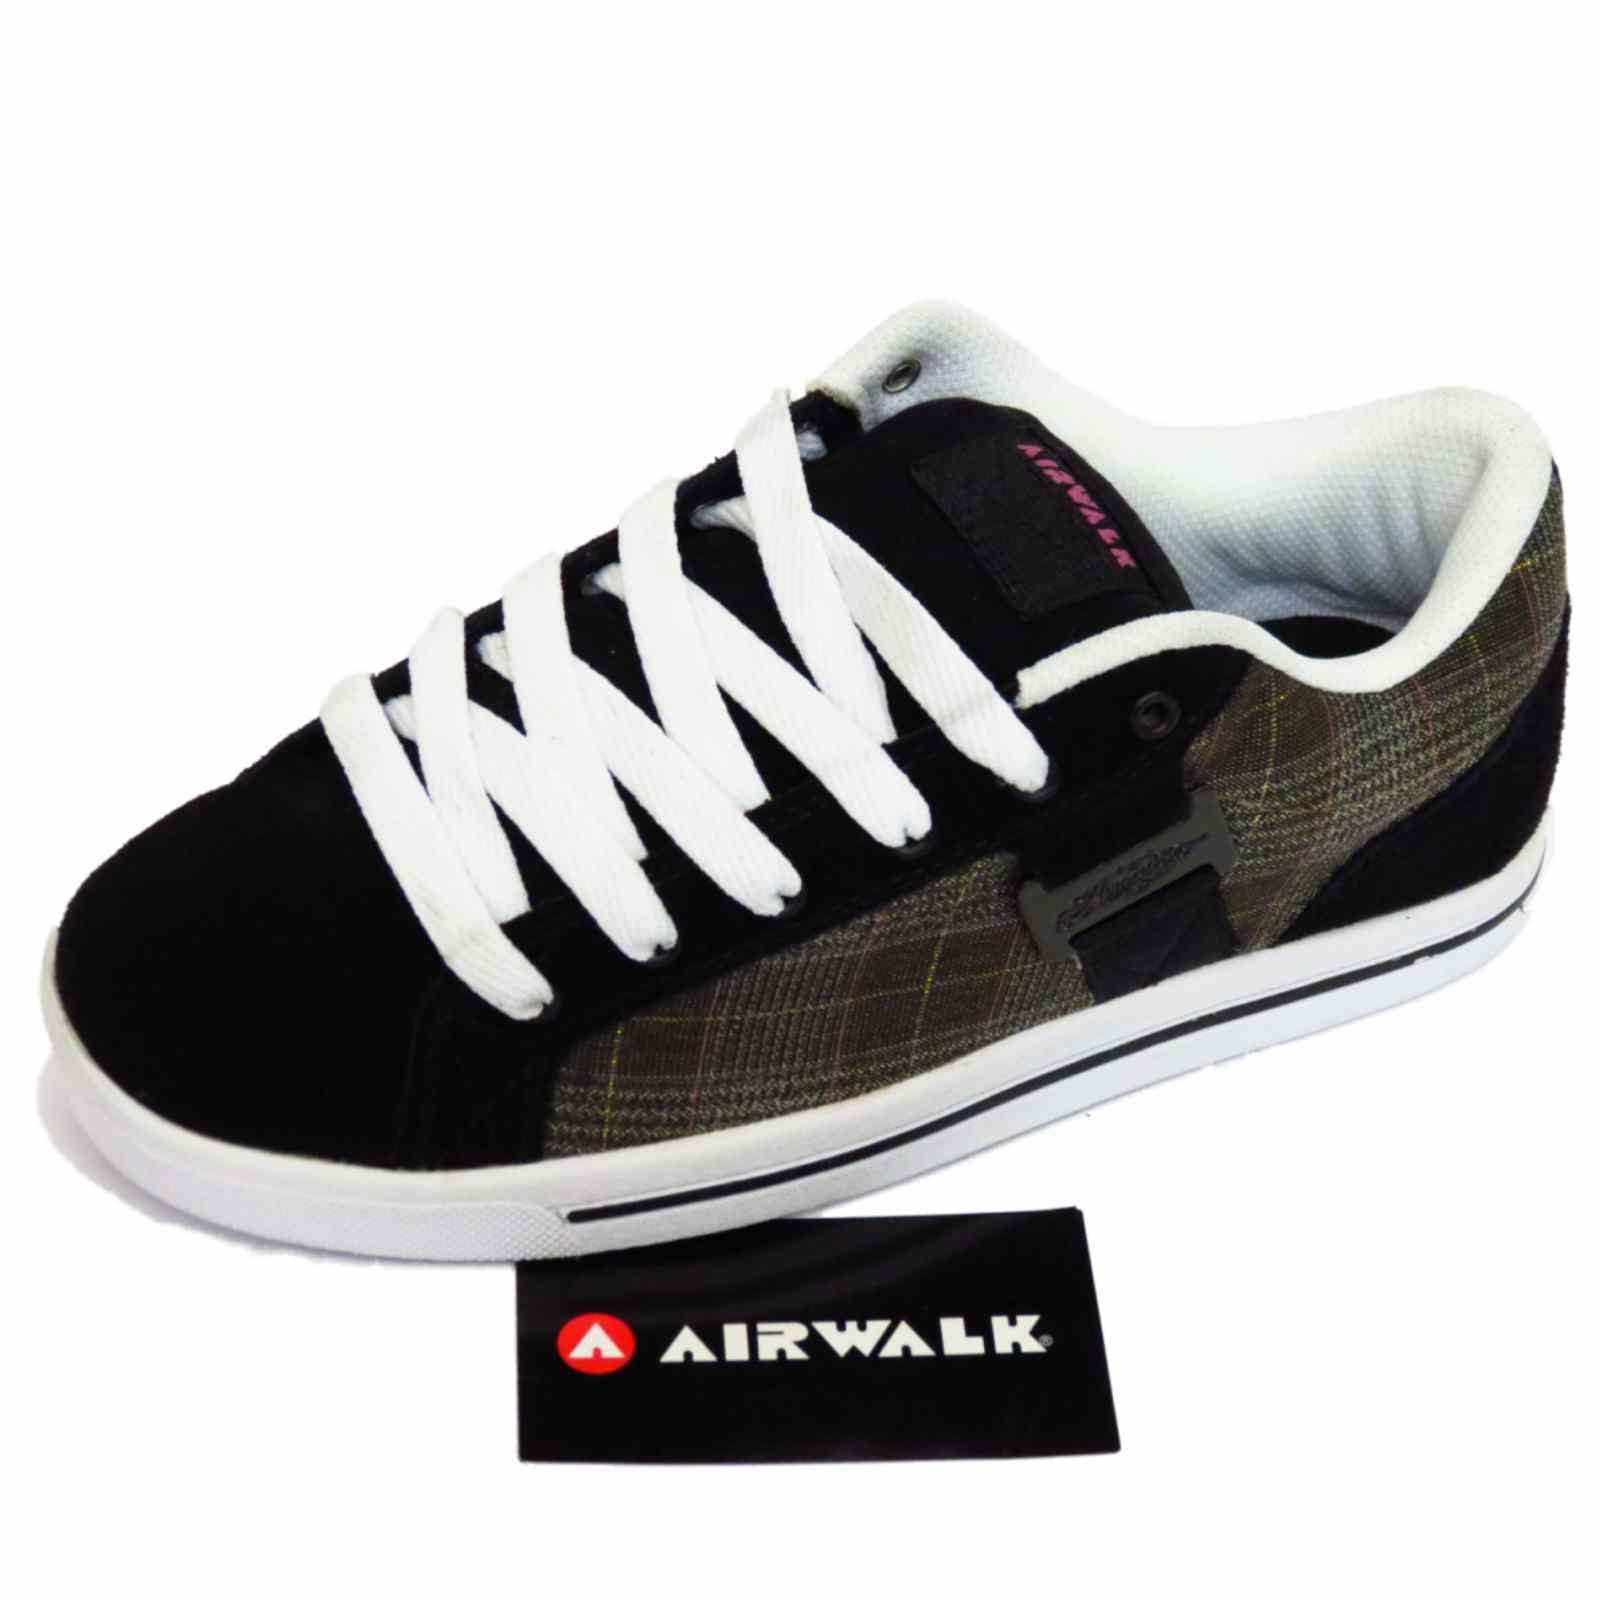 all black airwalk shoes